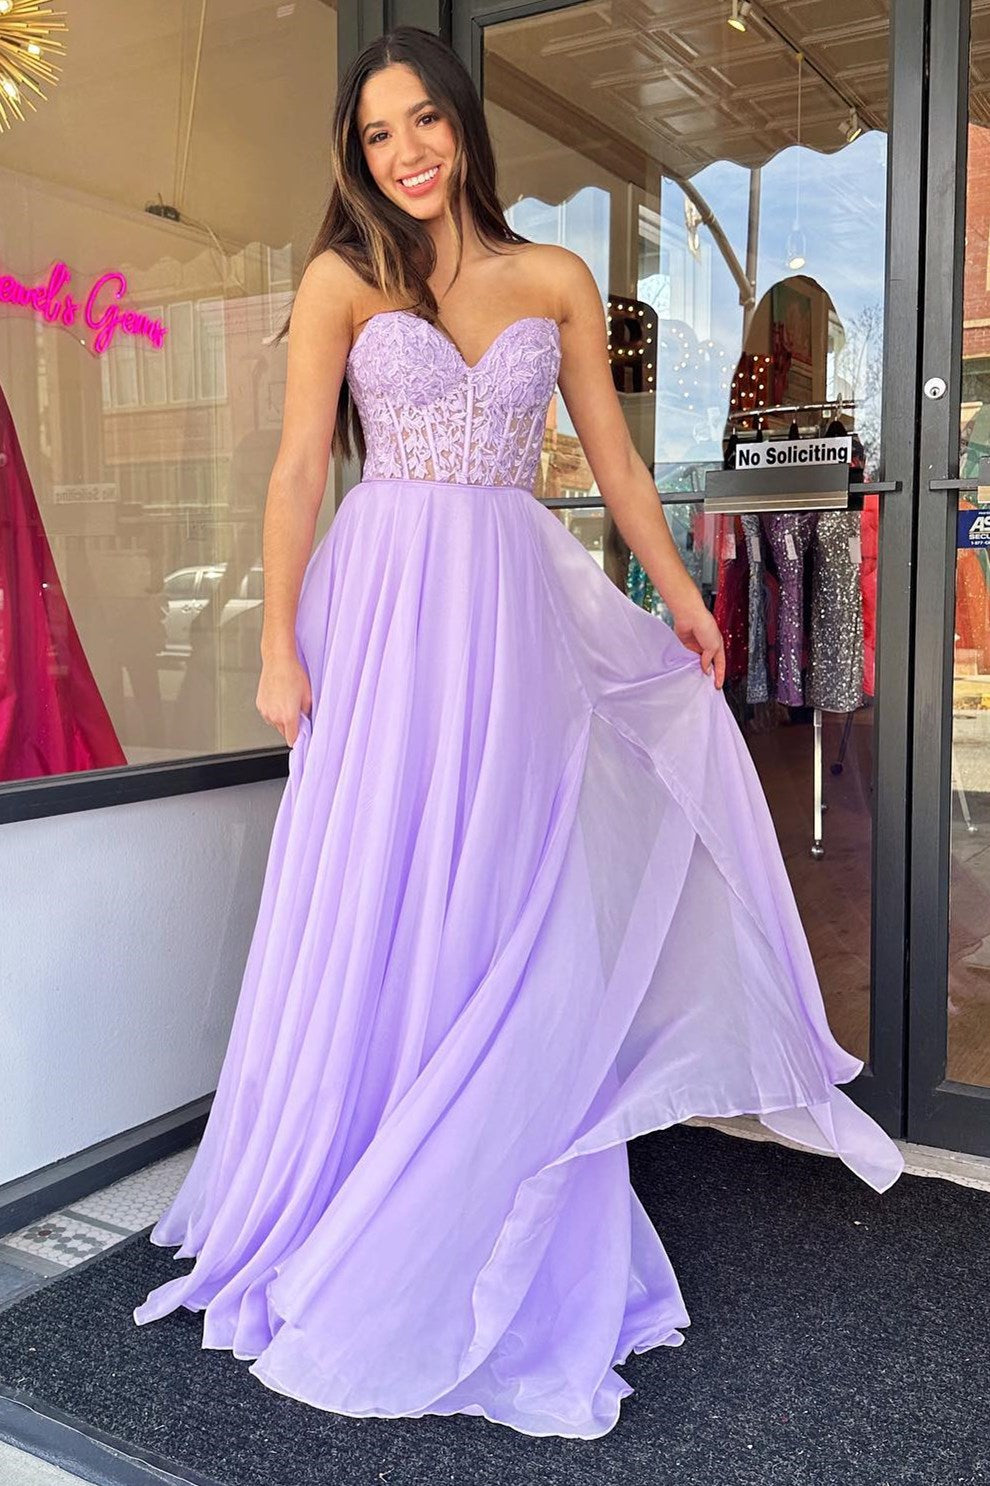 Rachel |A line Sweetheart Chiffon Prom Dress with Puff Sleeves